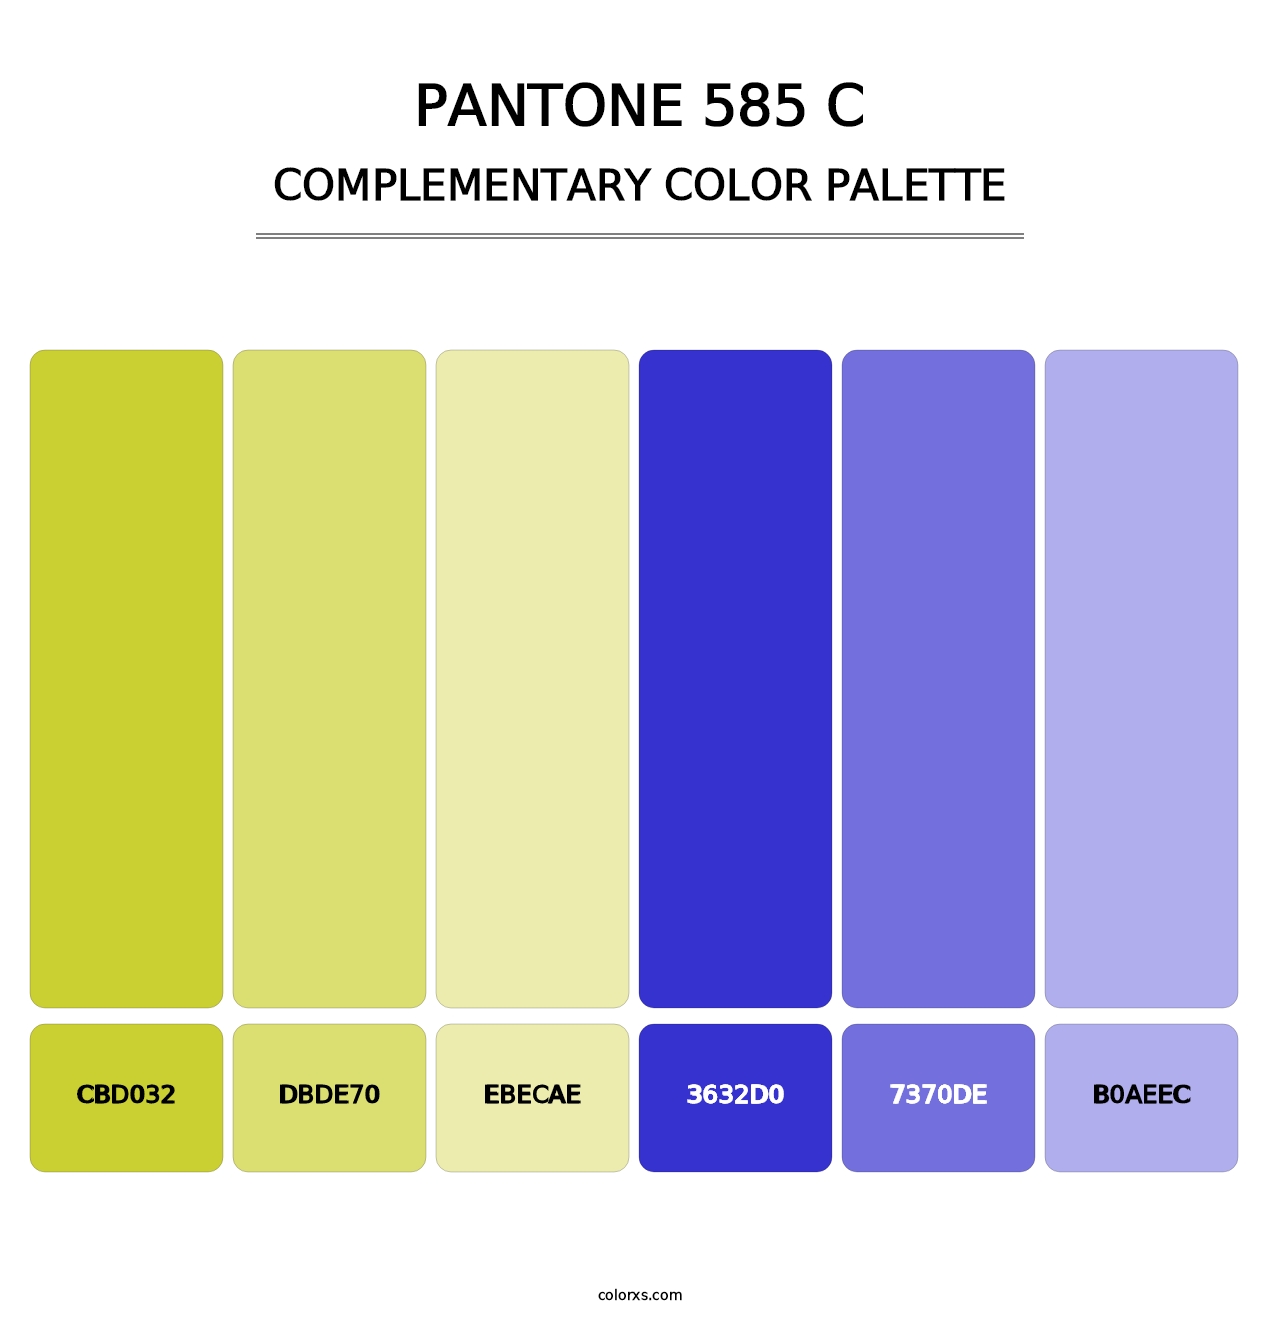 PANTONE 585 C - Complementary Color Palette